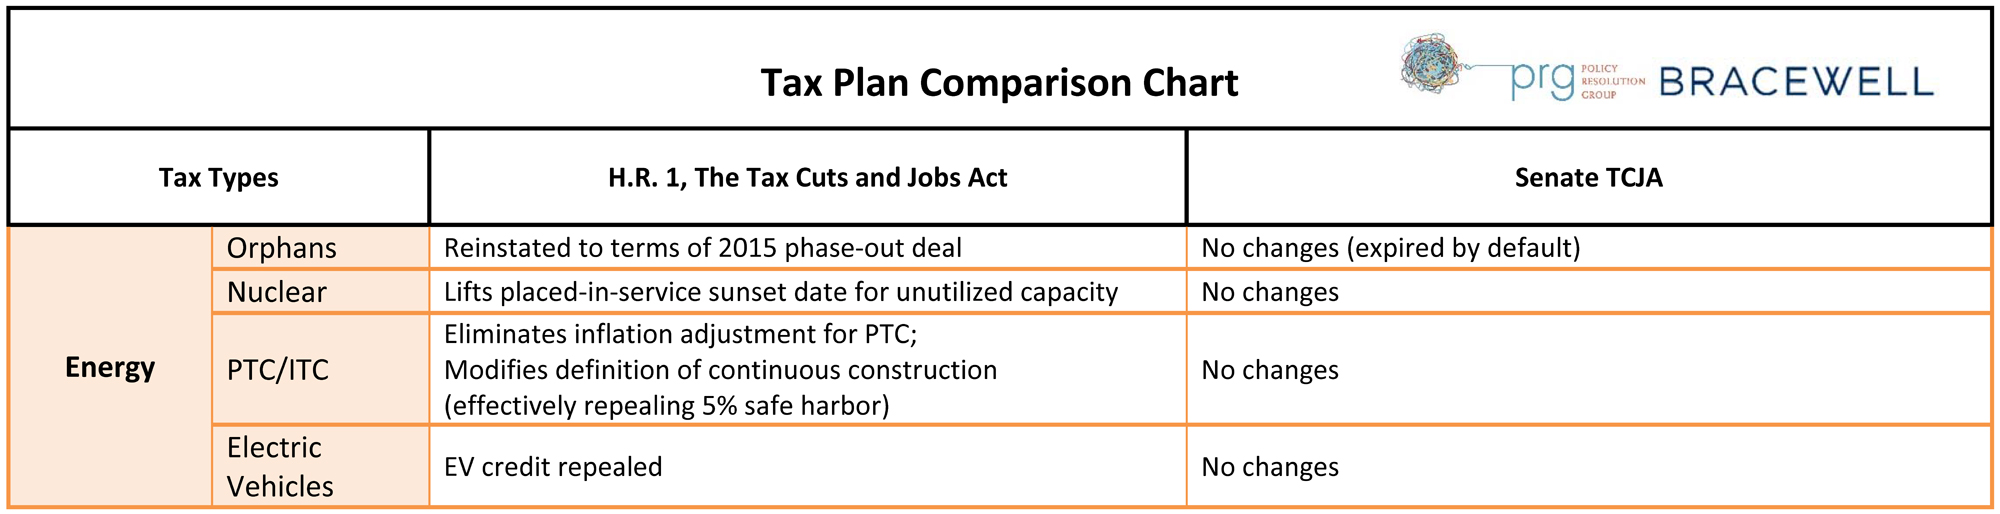 Tax Comparison Chart 4